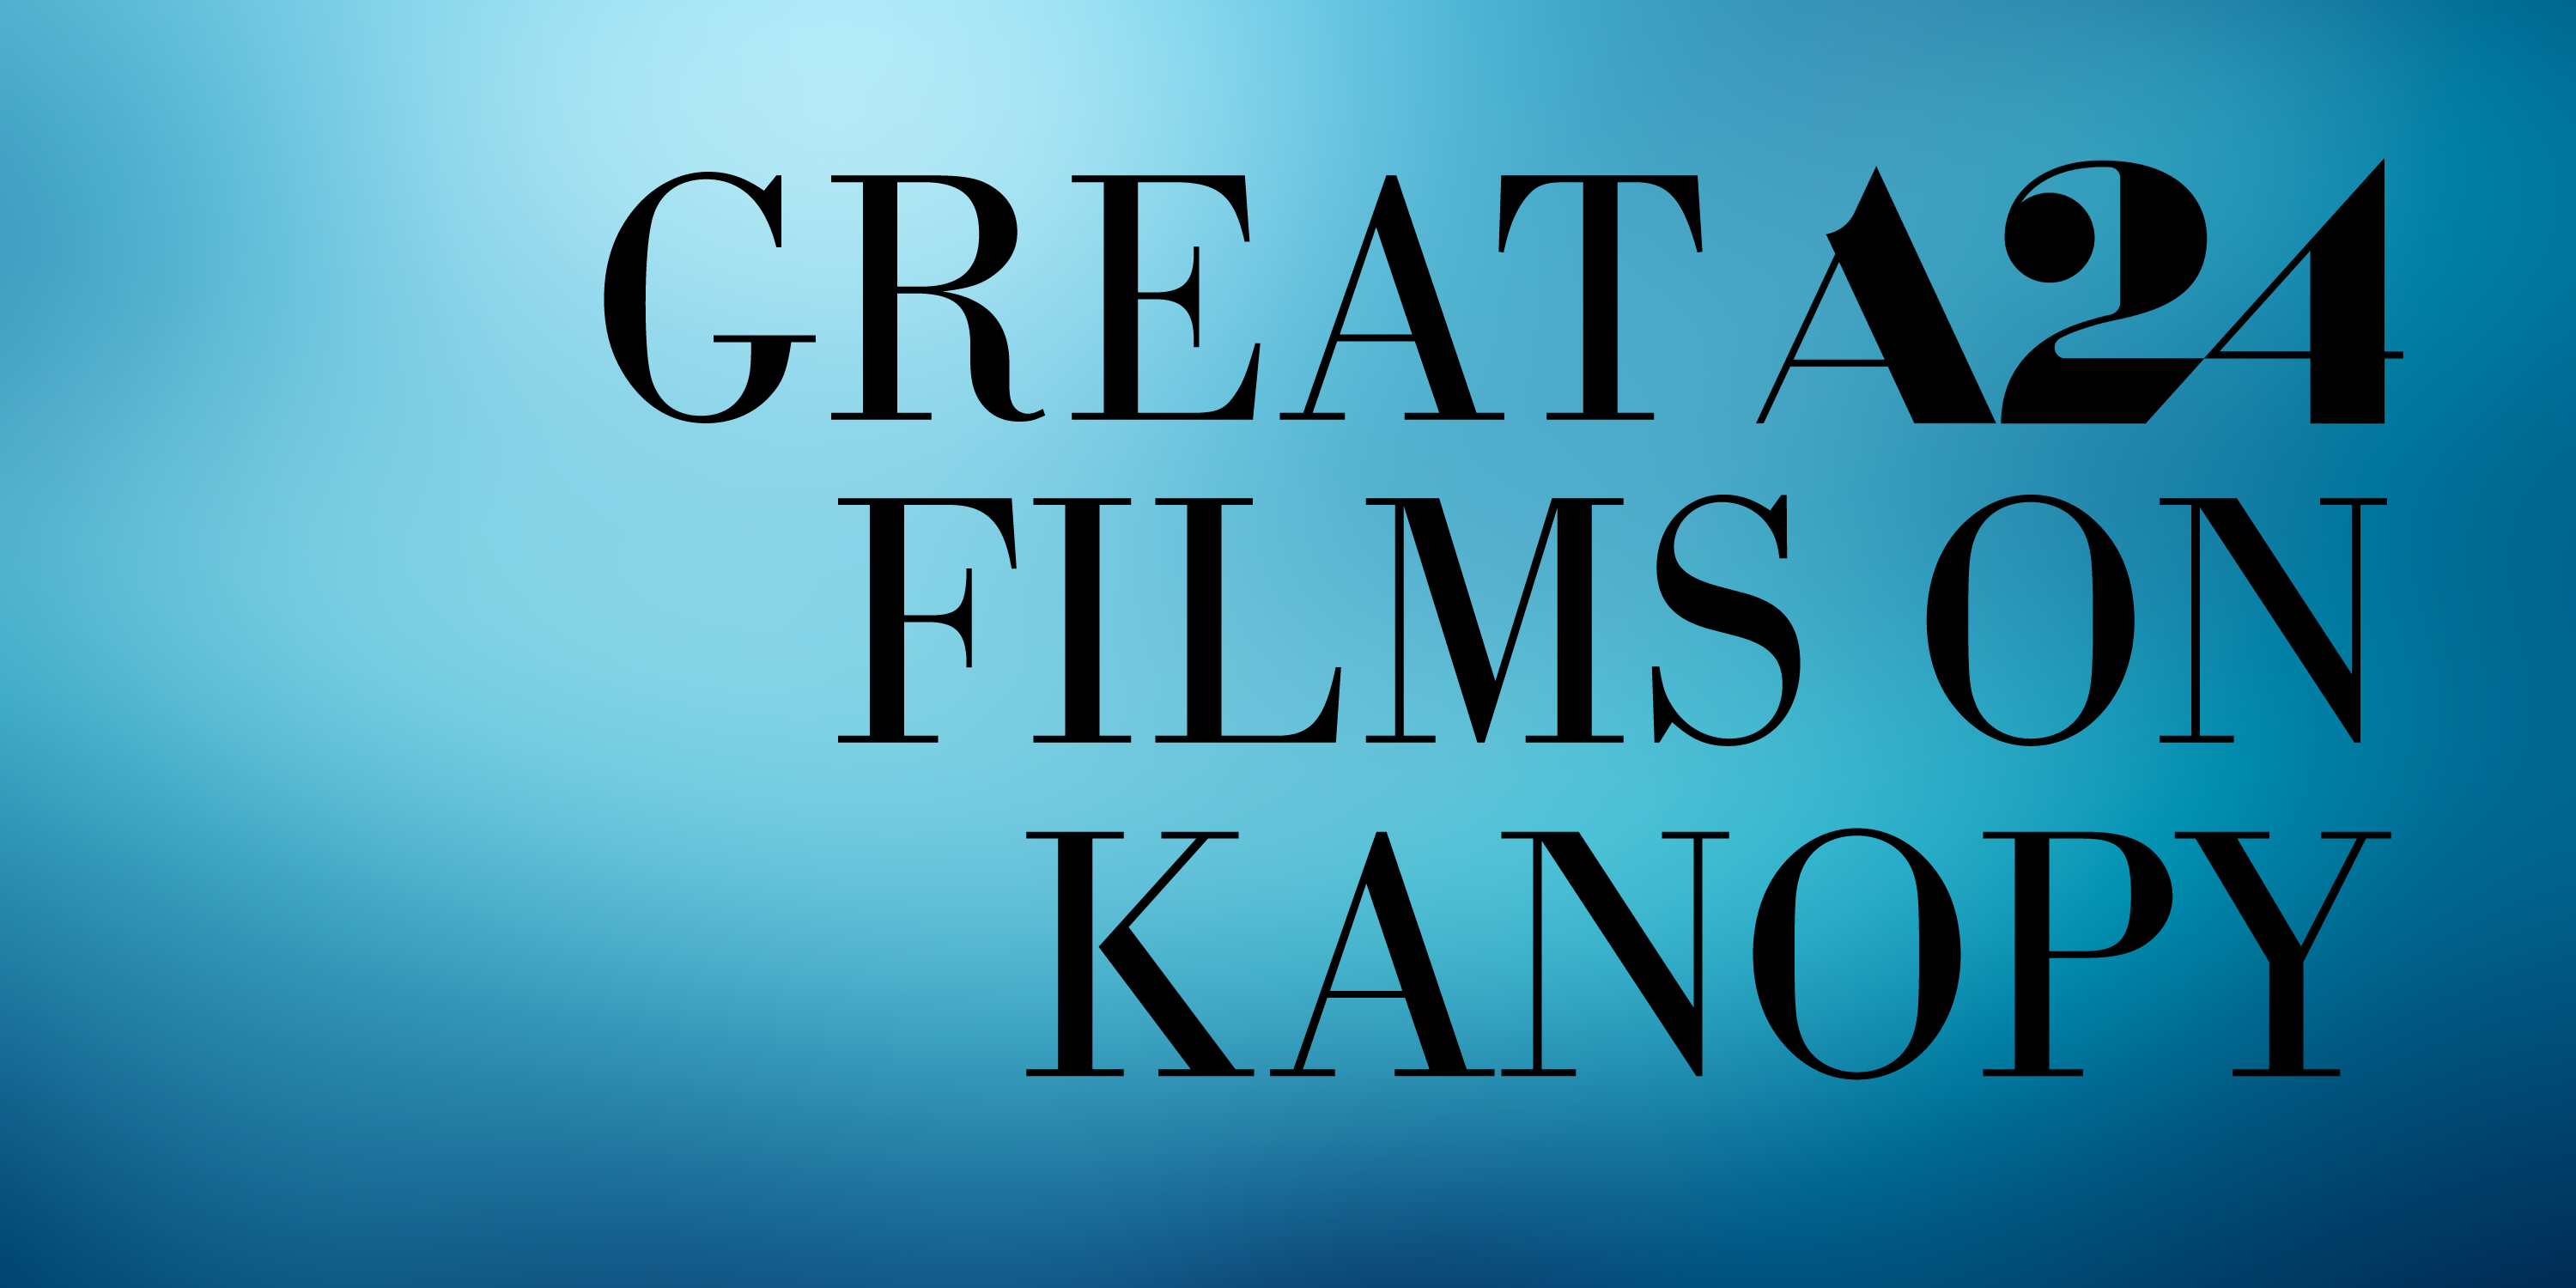 Great A24 Films on Kanopy